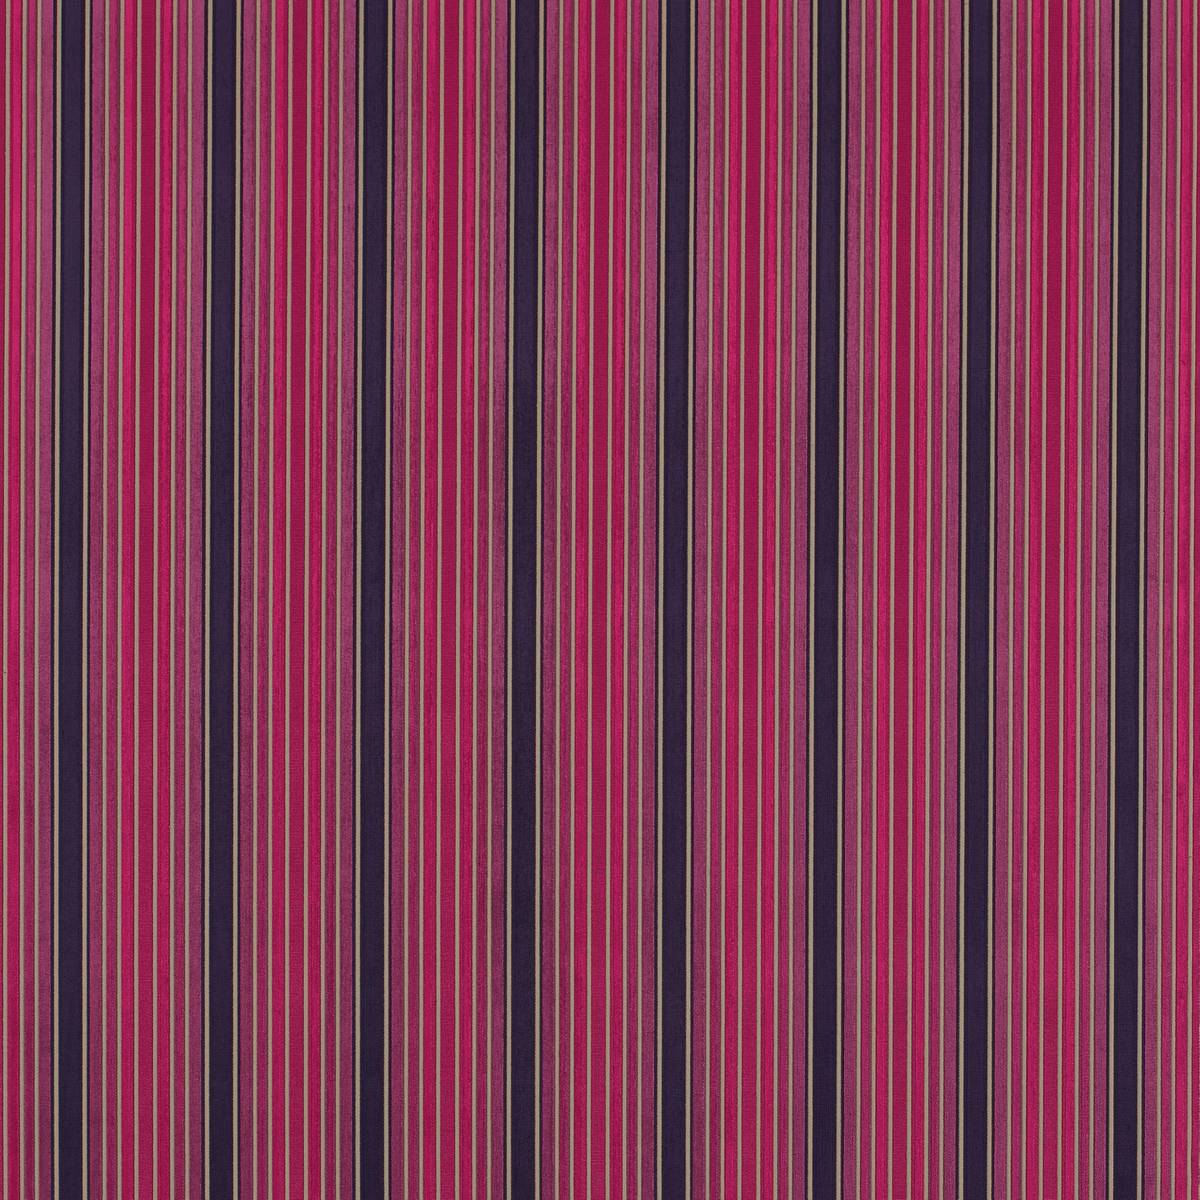 Brook Street Berry Fabric by Zoffany